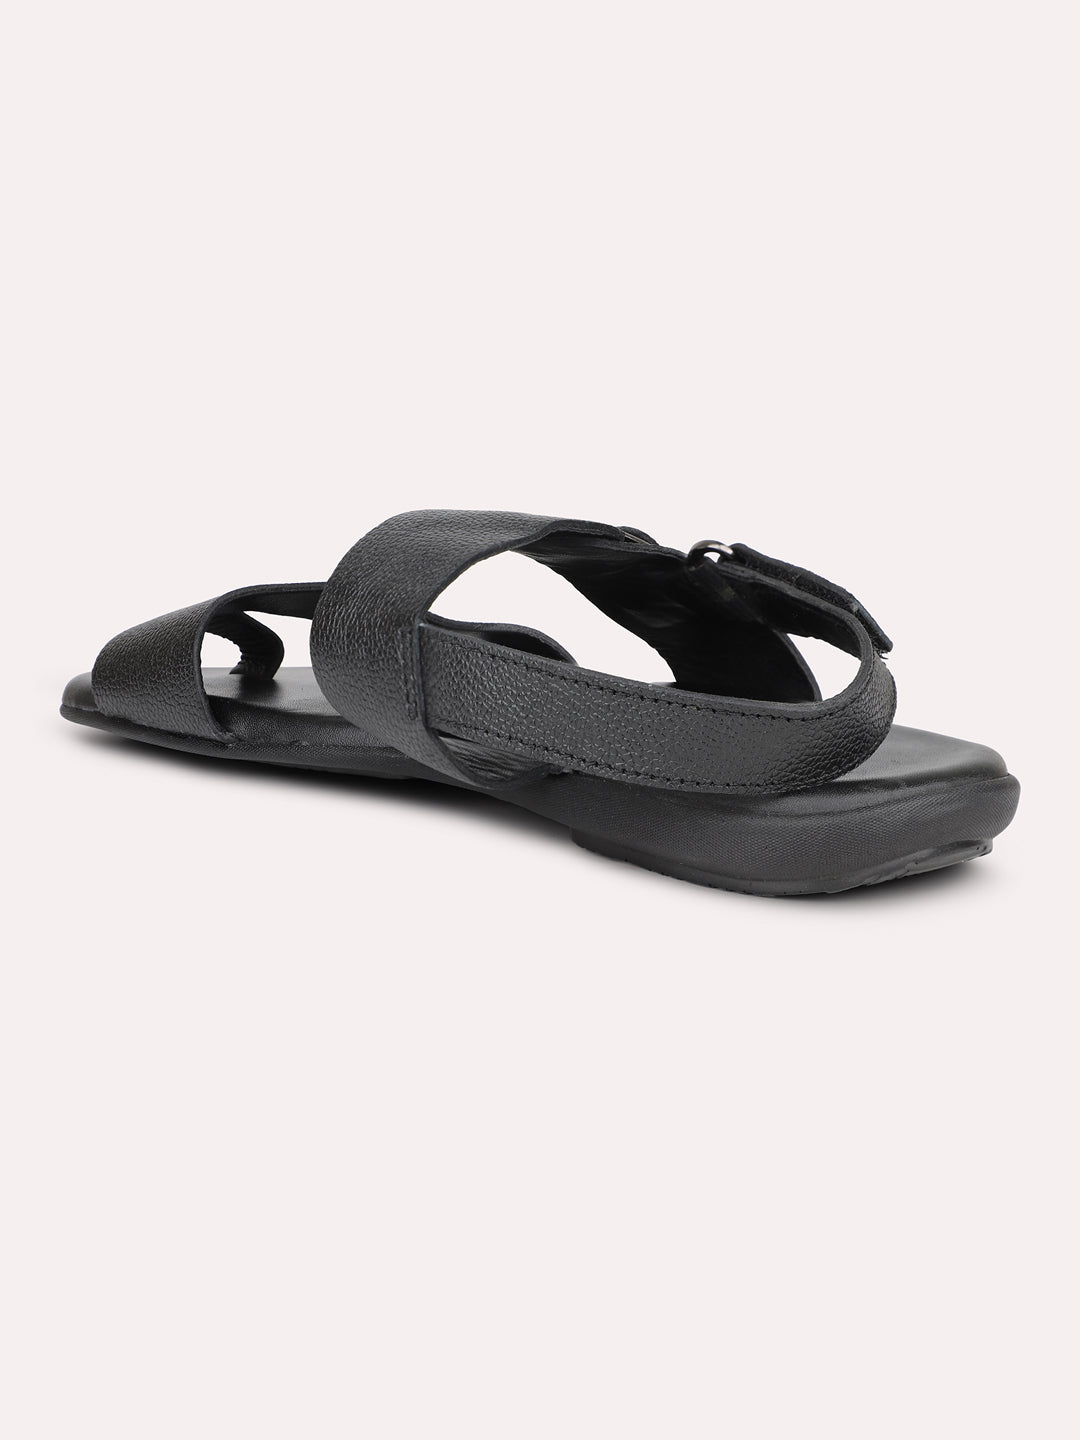 Atesber Black Formal Sandal With Buckle For Mens